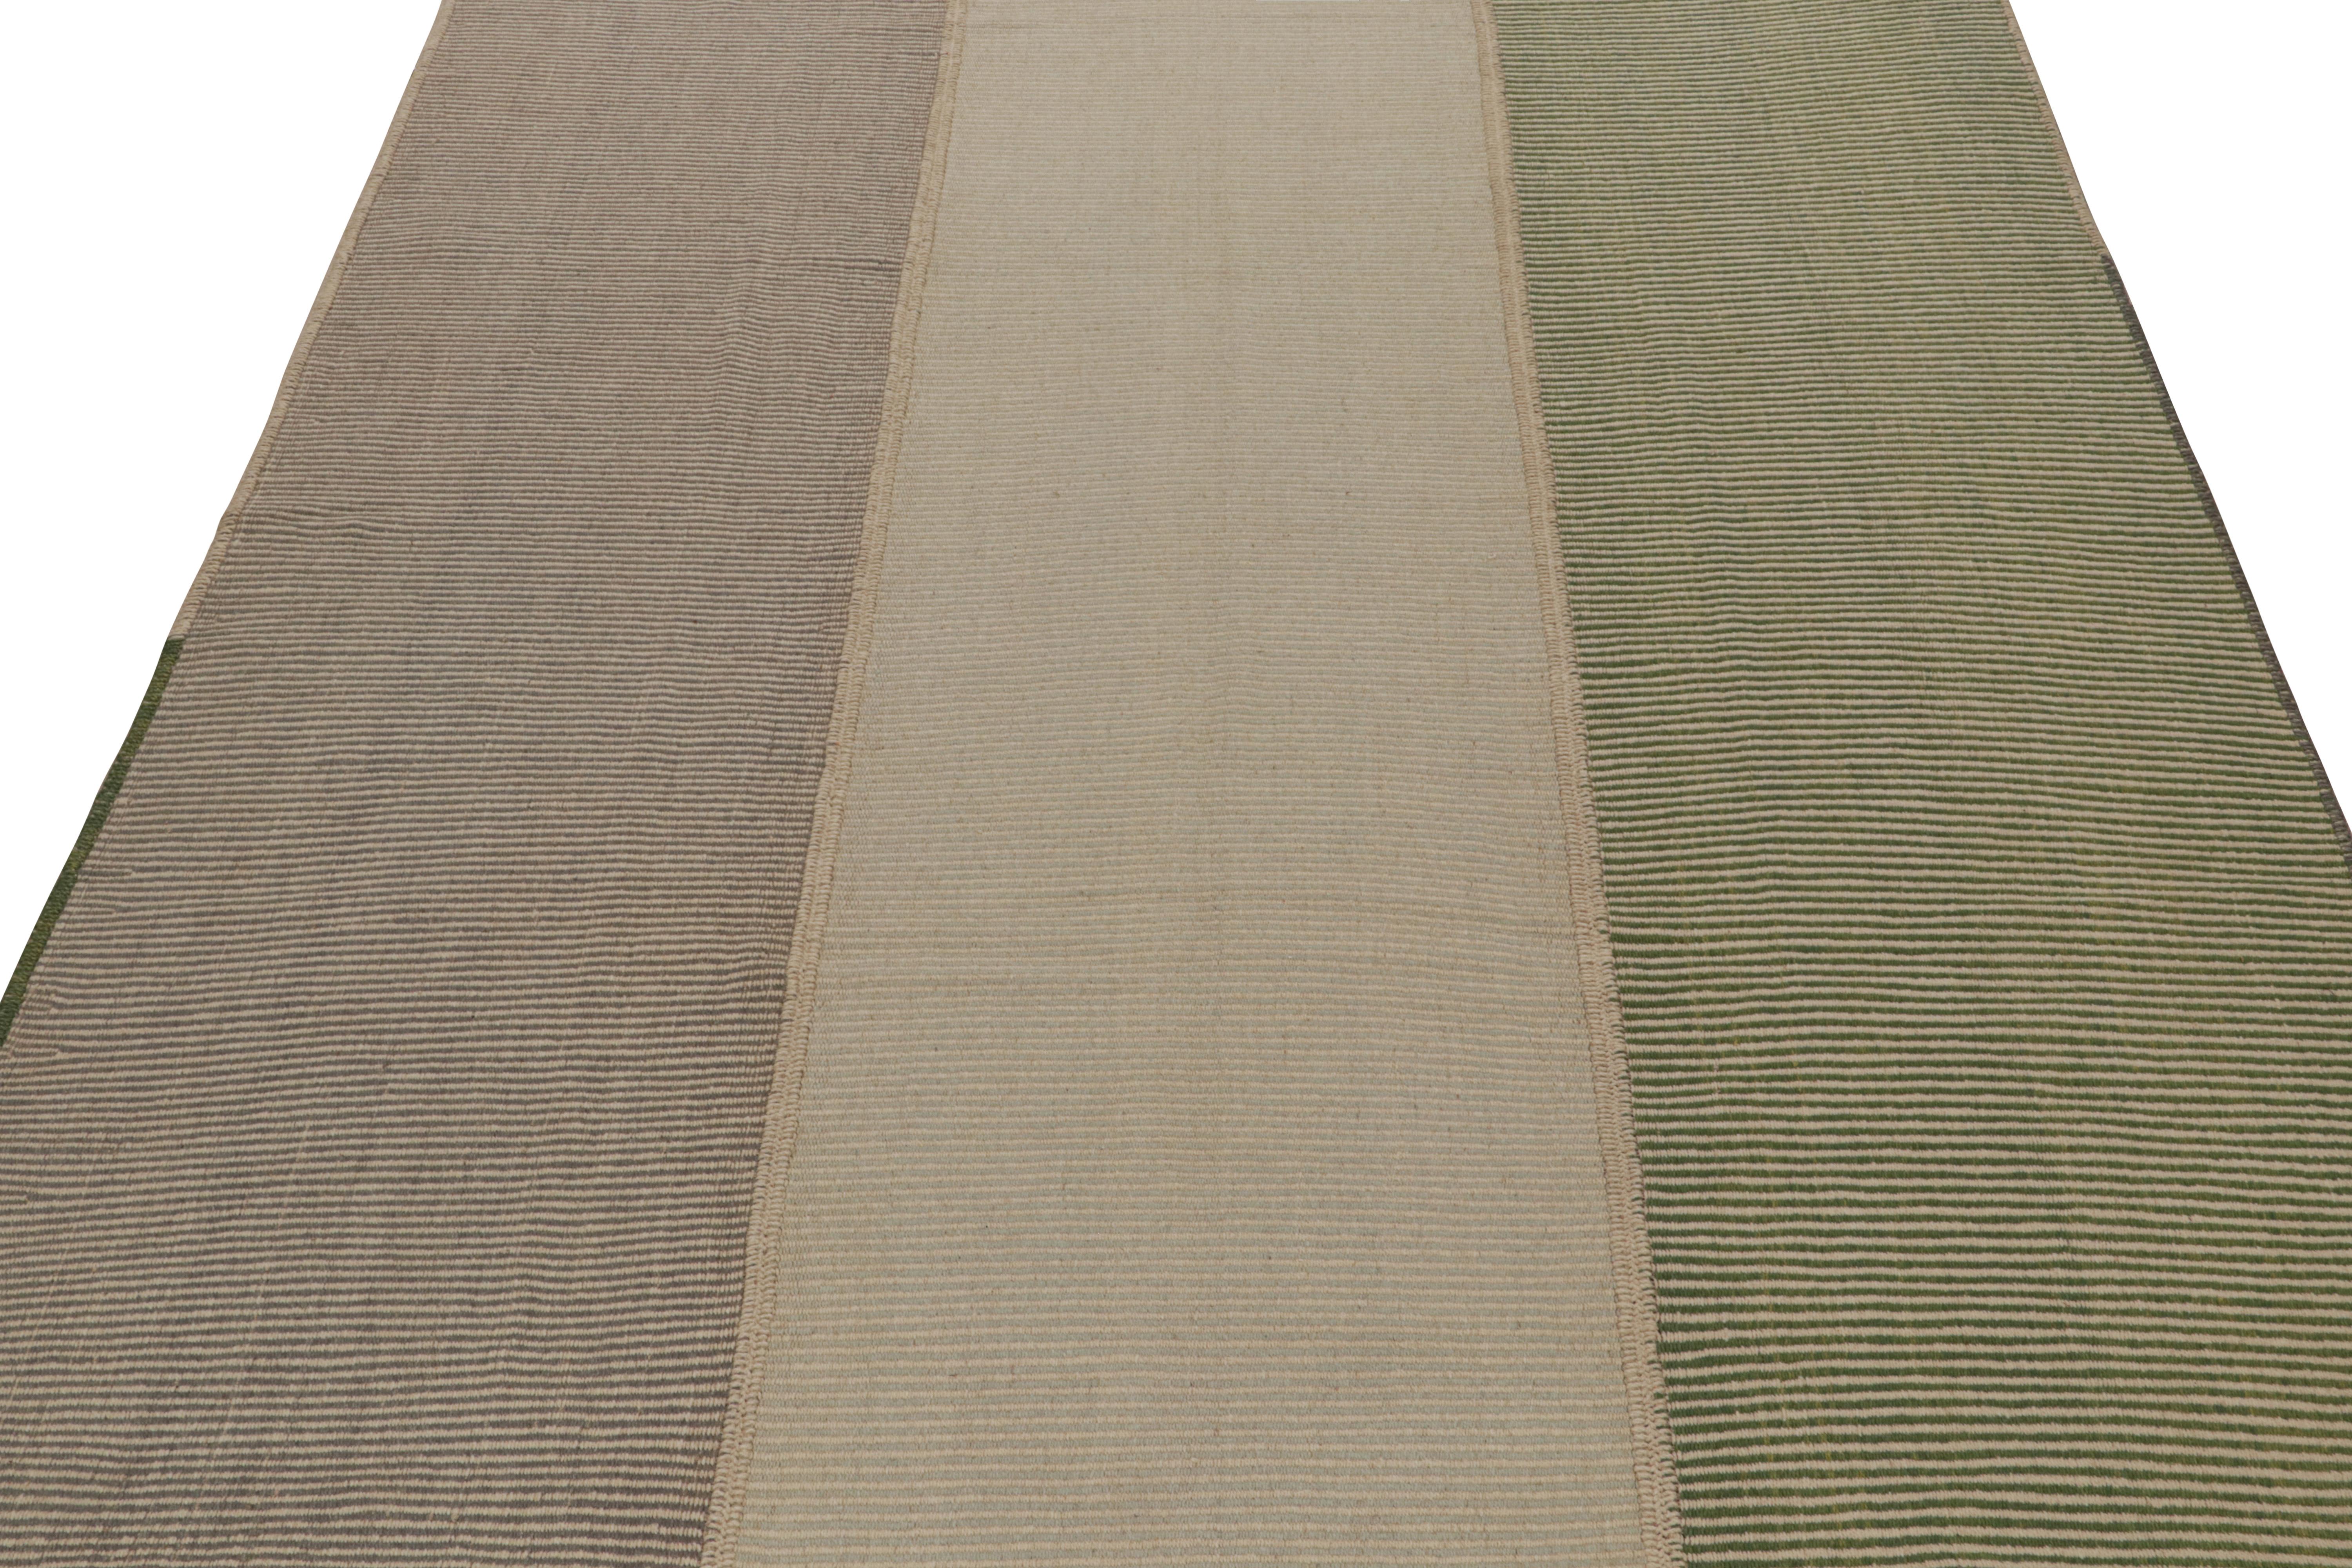 Moderne Rug & Kilim's Modern Kilim Rug in Beige-Brown & Green Textural Stripes (tapis moderne en Kilim beige, marron et vert) en vente